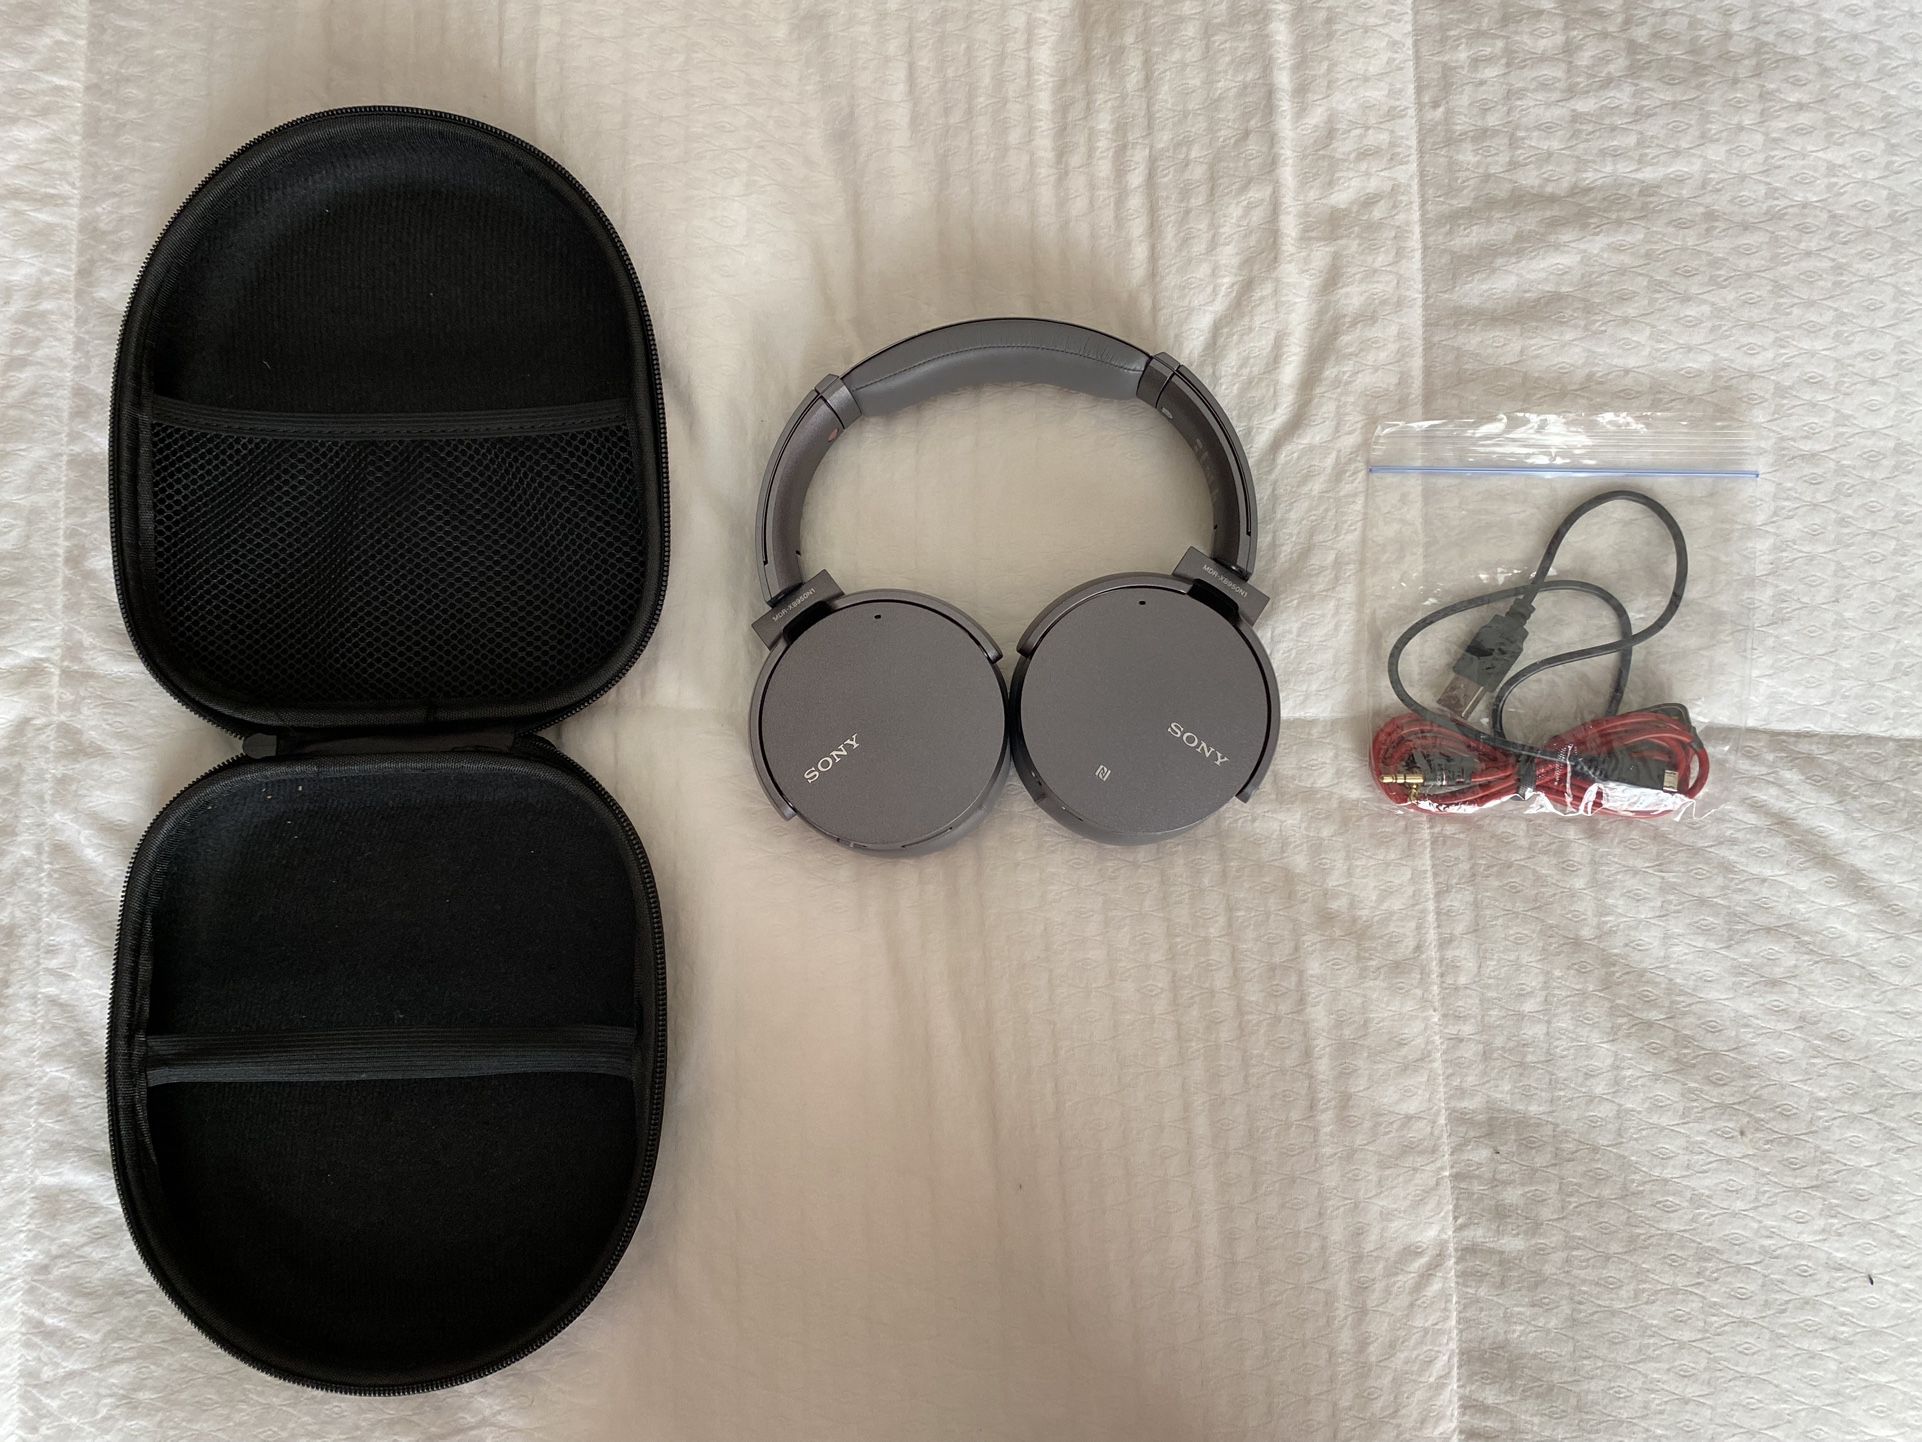 Somy MDR-XB950N1 Wireless Noise Canceling Headphones 